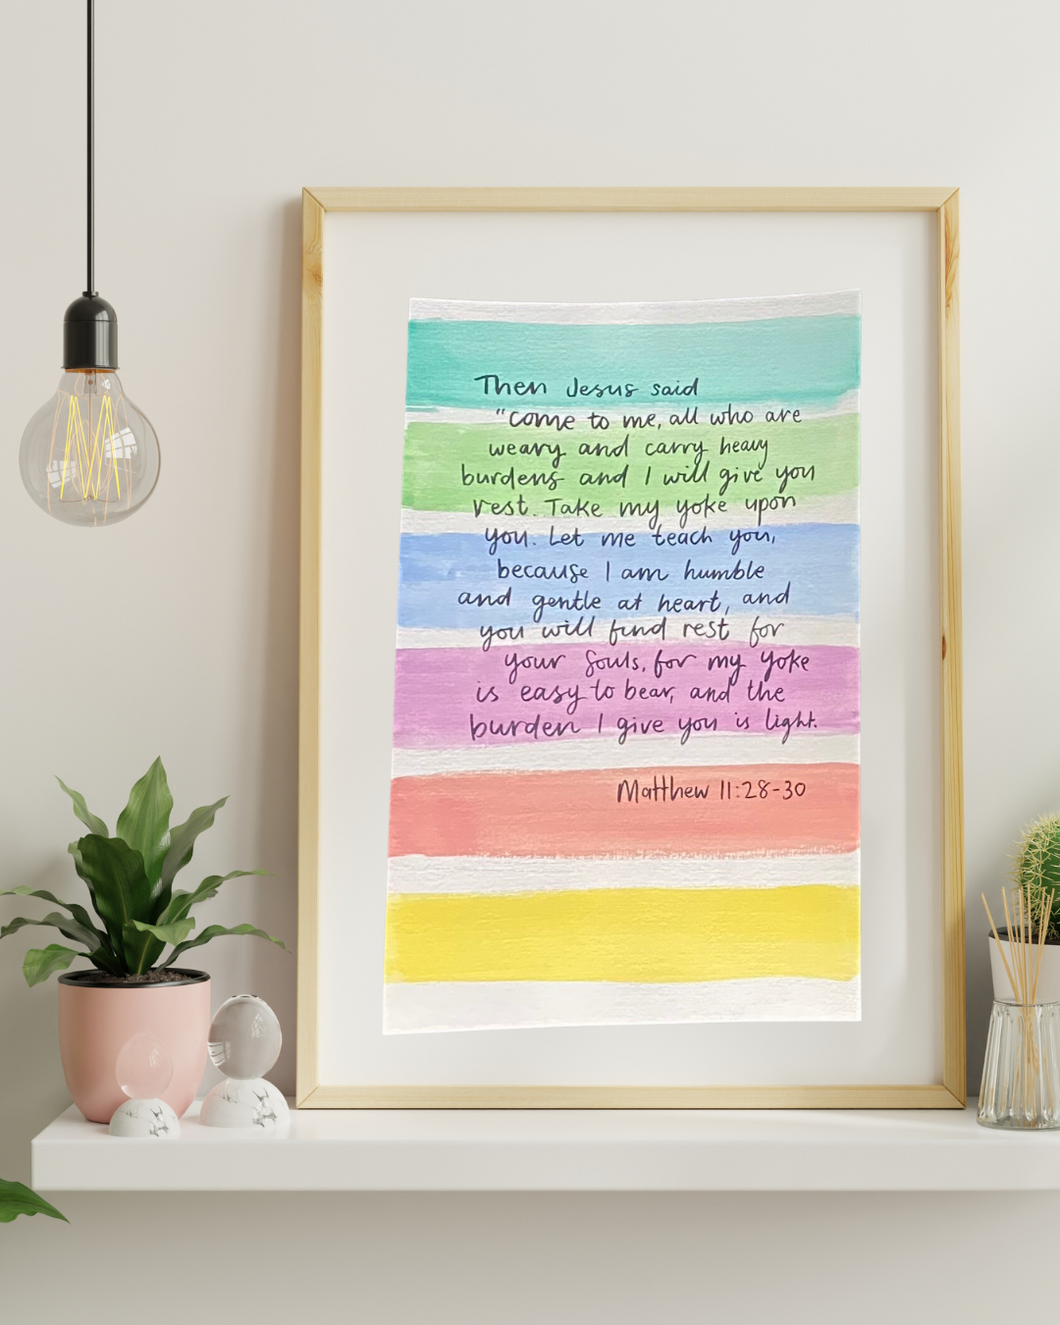 Prayerful Prints - Custom one of a kind Bible verse artwork